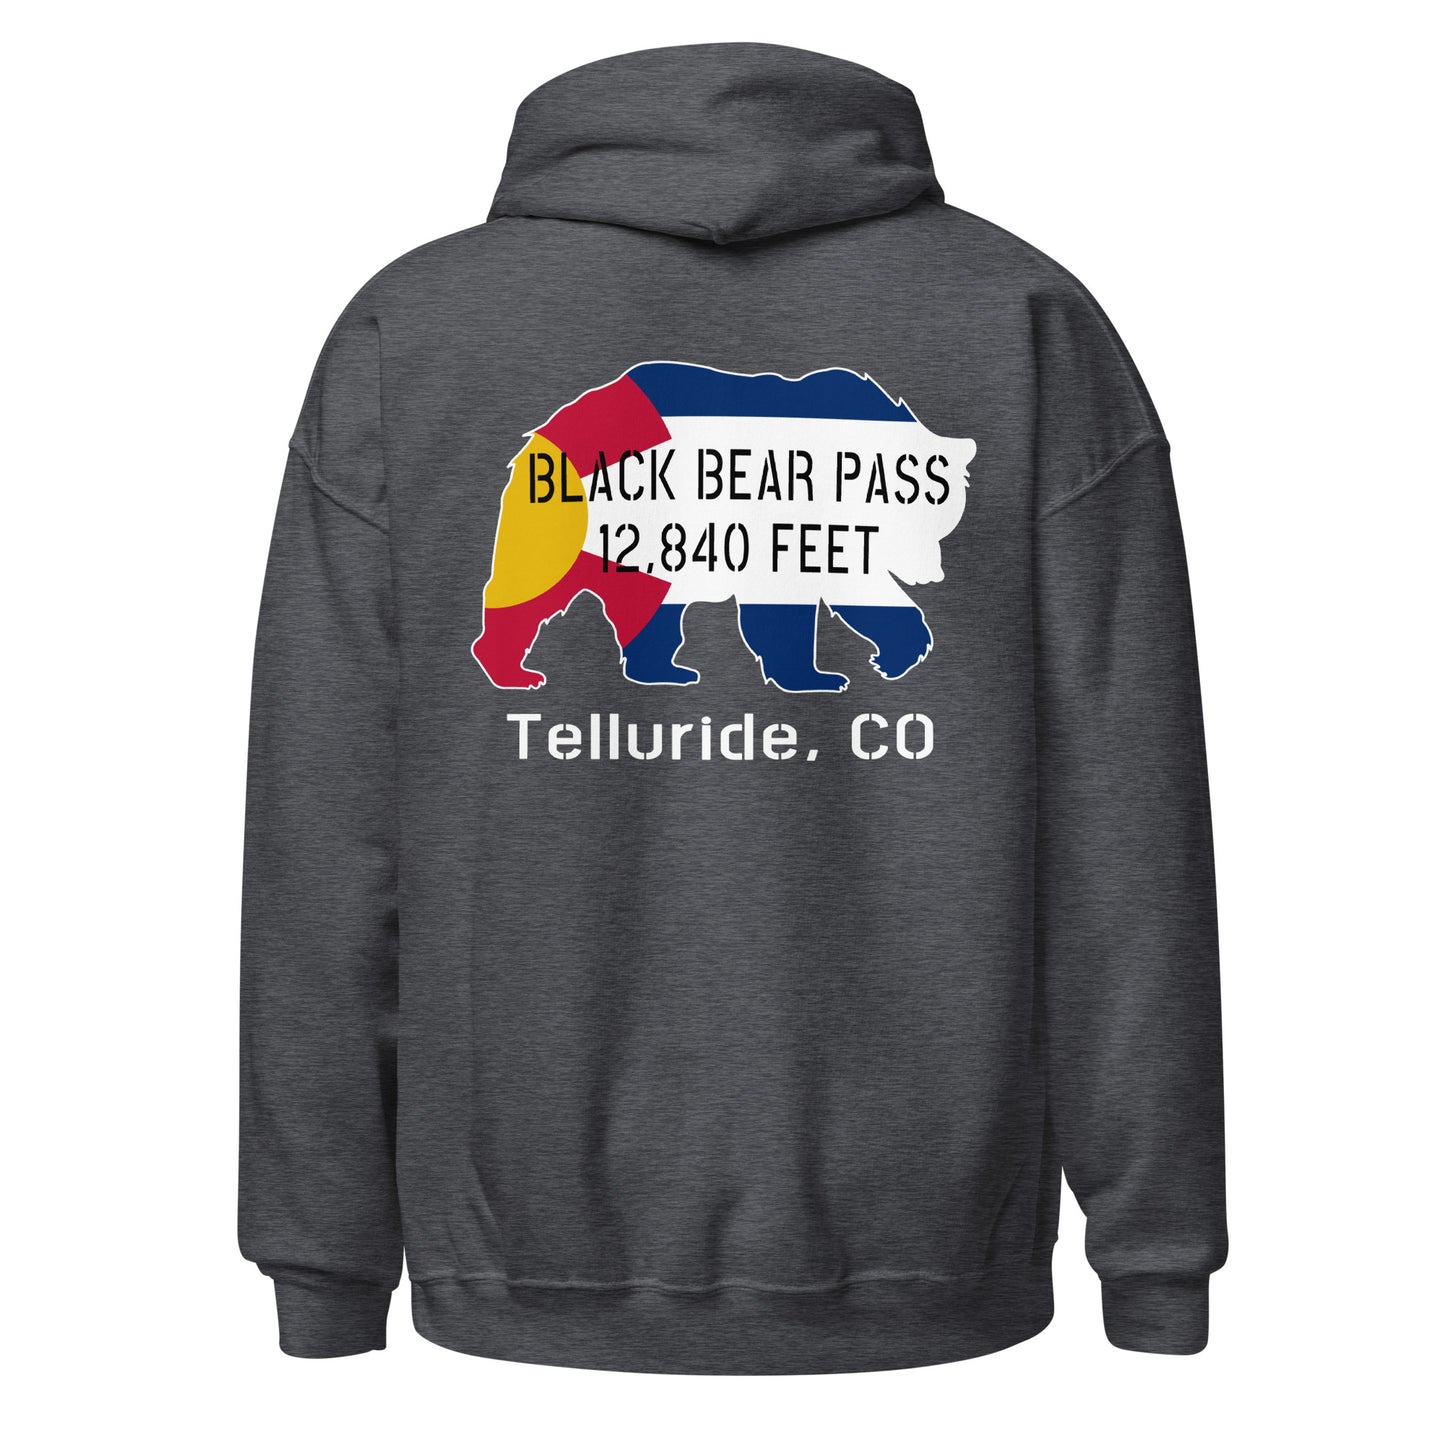 Black Bear Pass, 12840 feet, Telluride, CO. Dark Grey hoodie. Back View. overland365.com